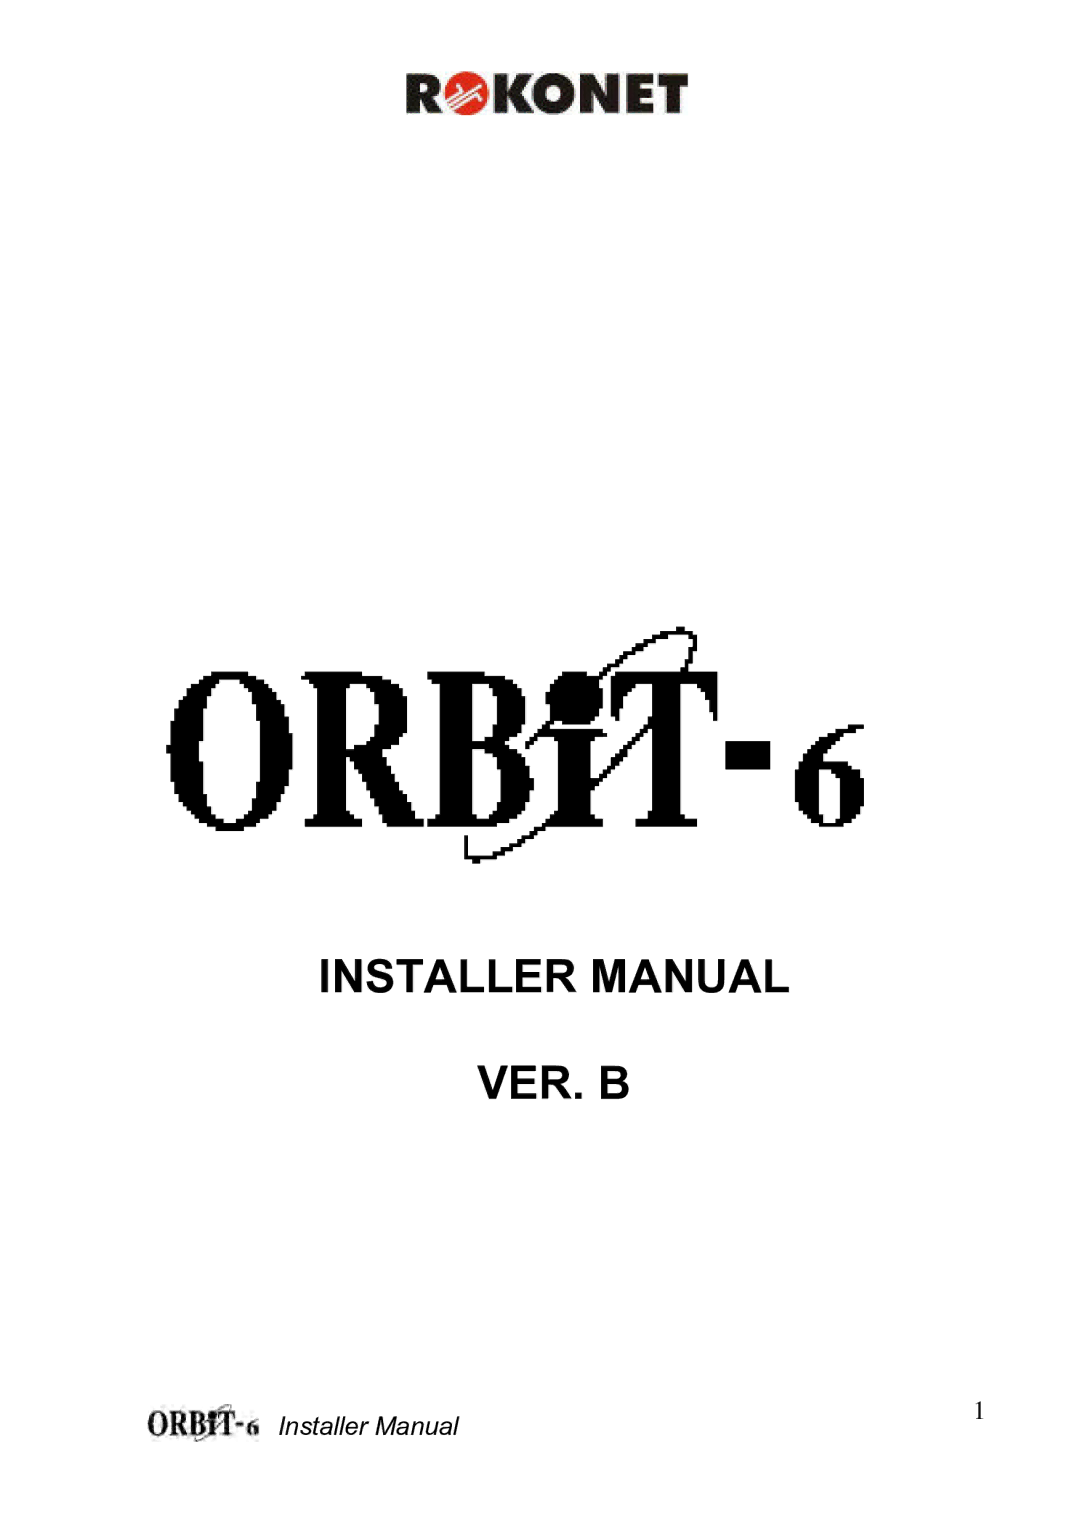 Orbit Manufacturing ORBIT-6 RP-206 manual Installer Manual VER. B 